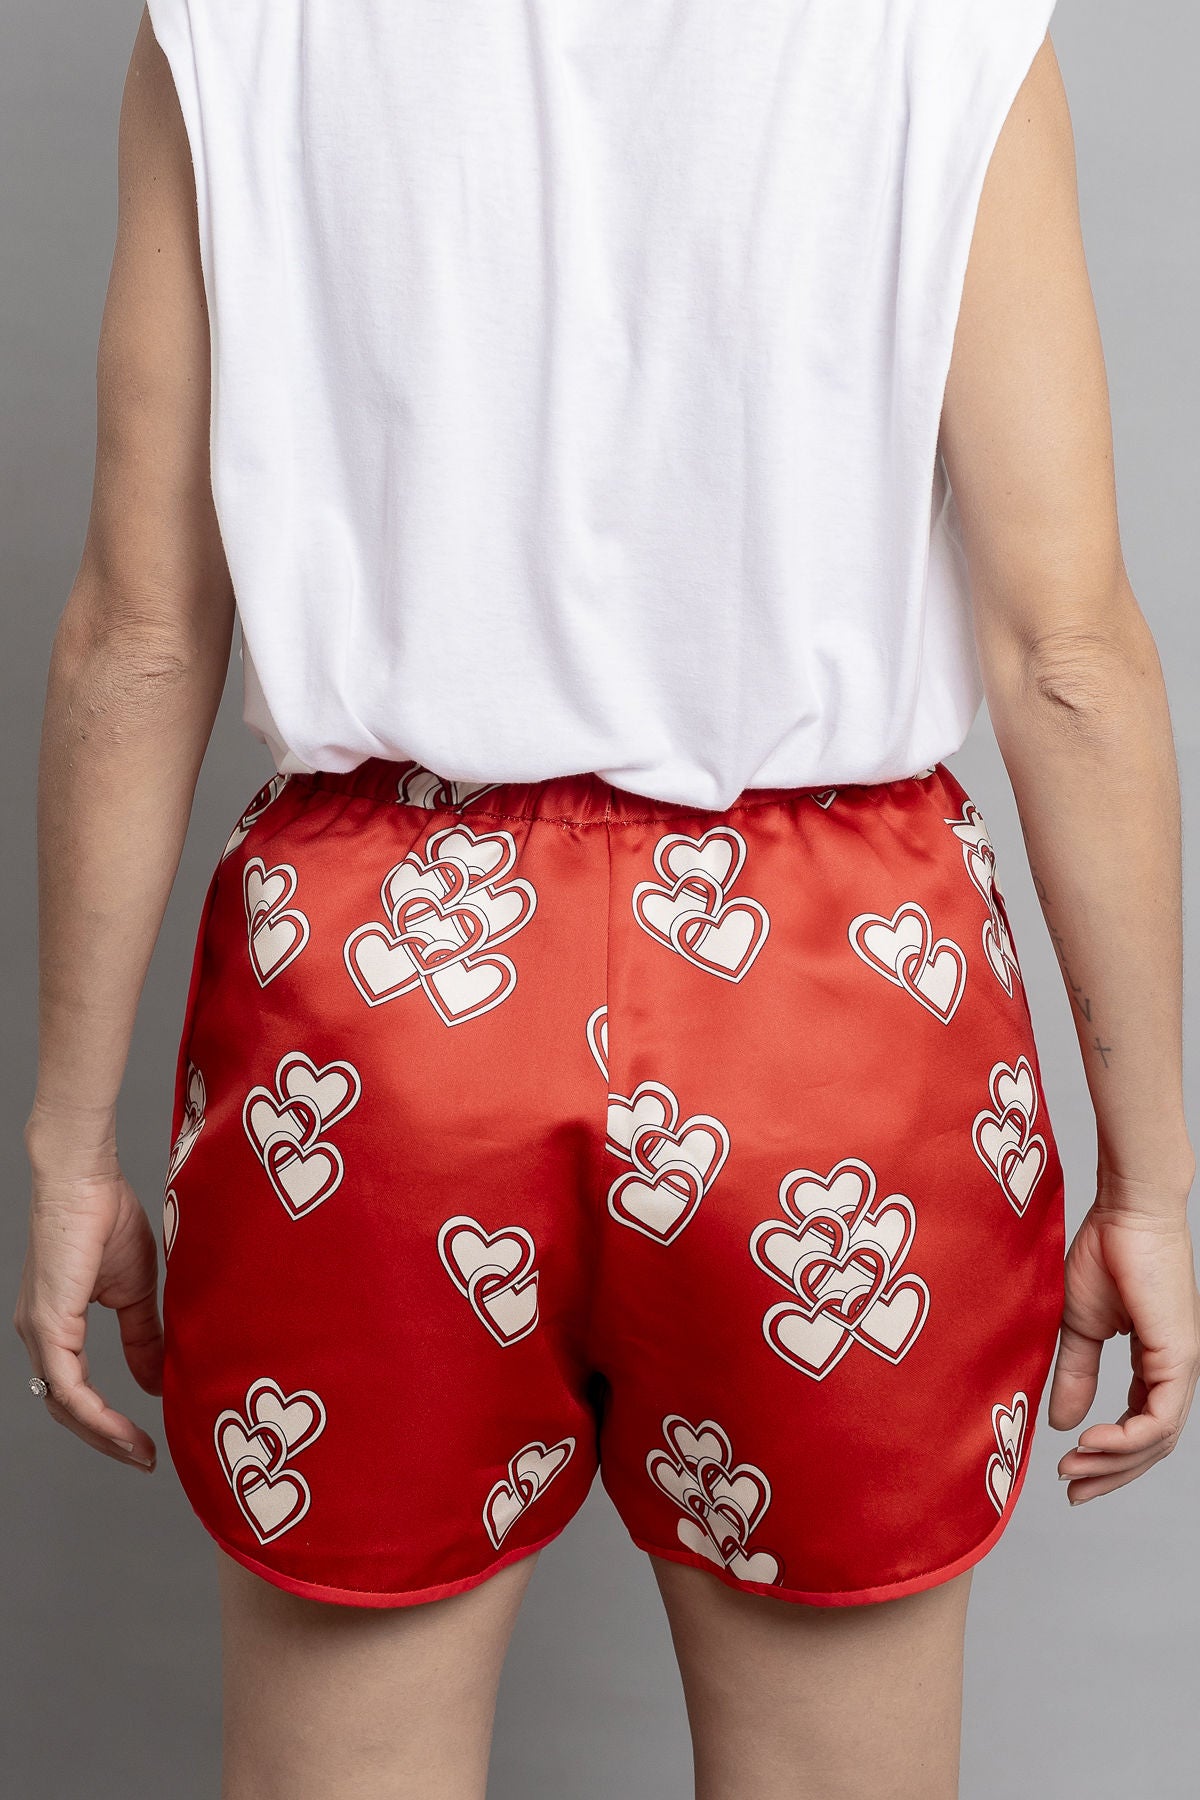 Red Hearts Shorts - Shantall Lacayo